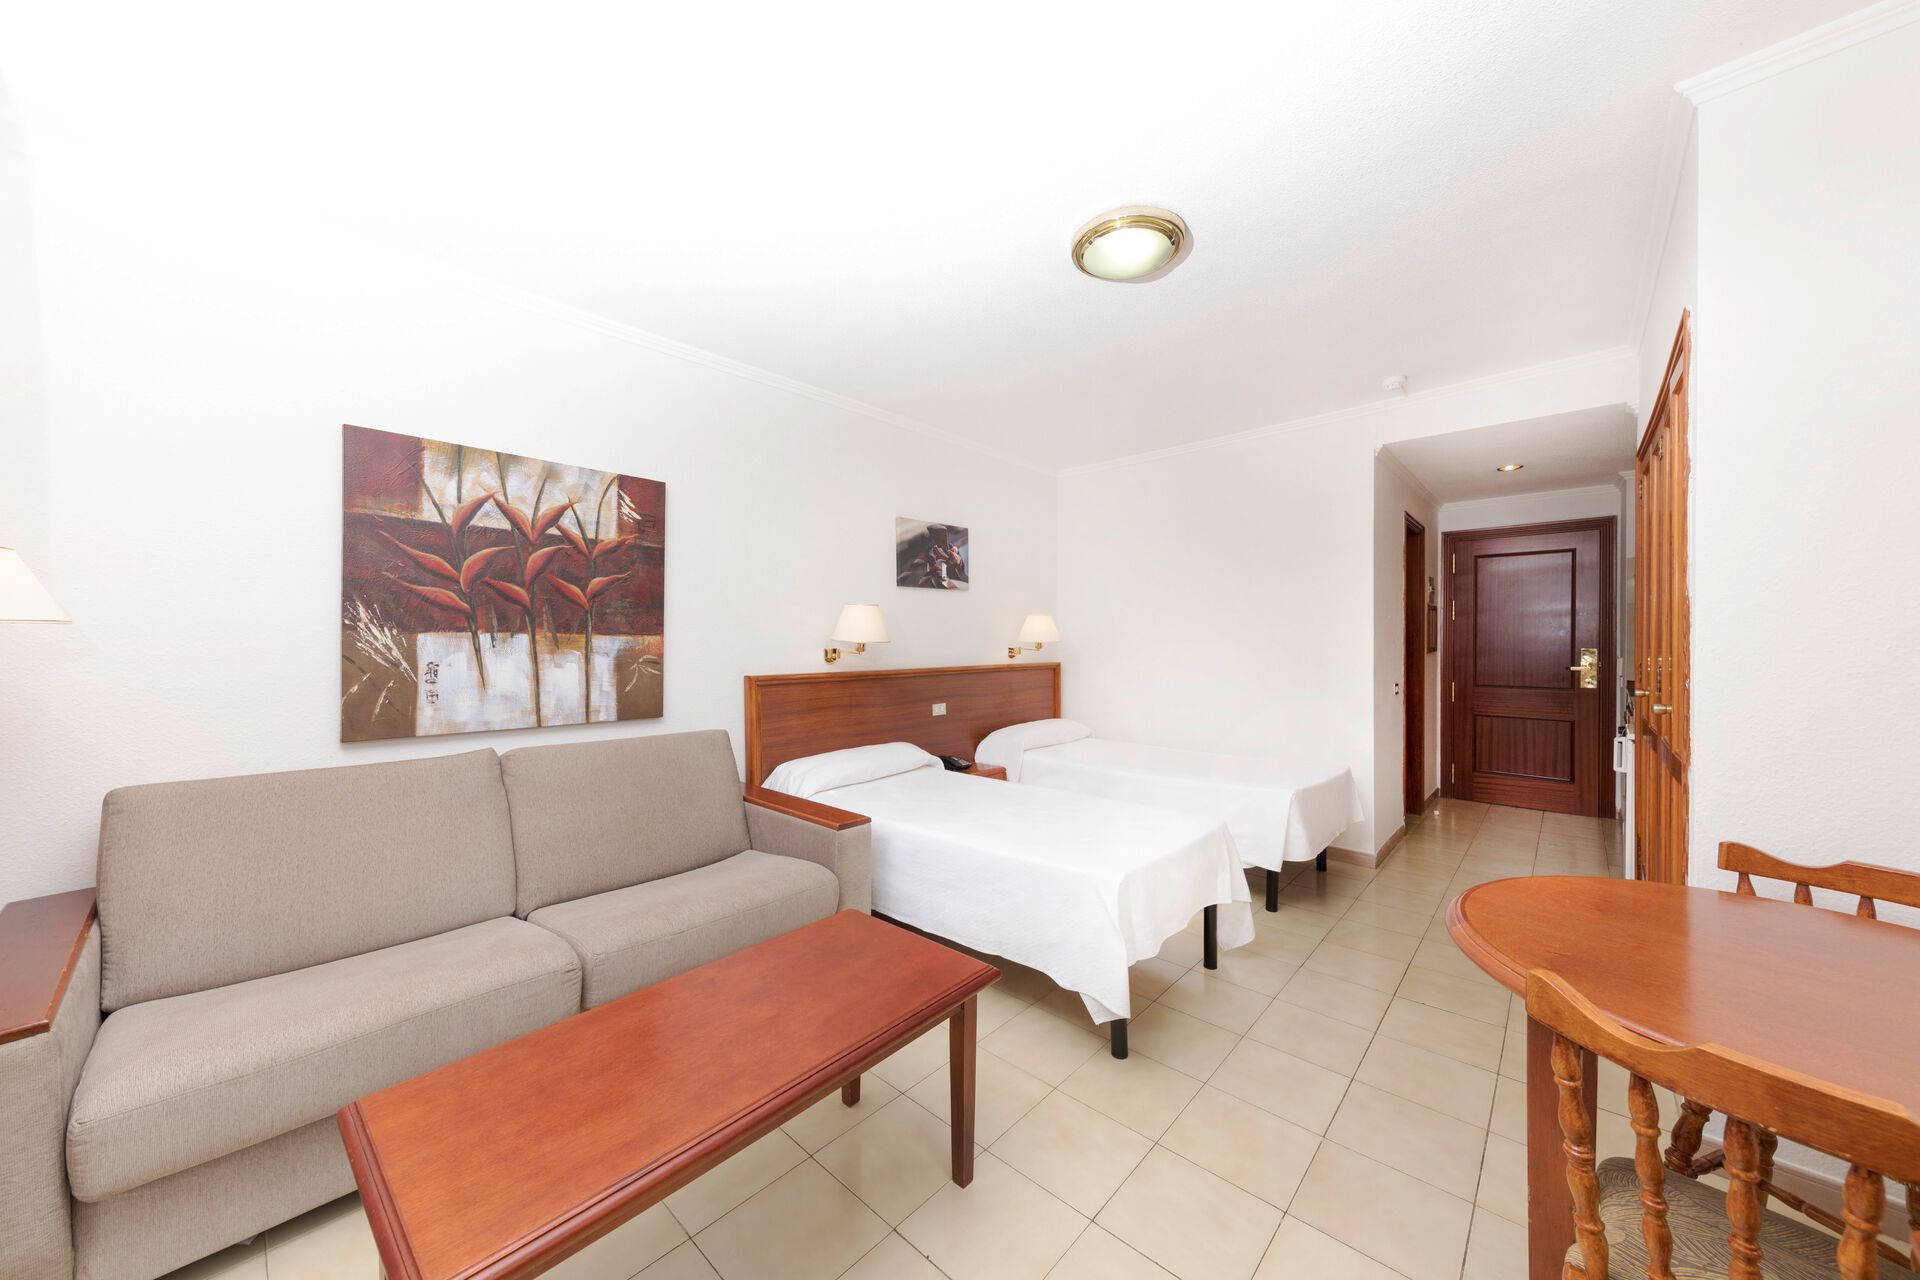 Canaries - Tenerife - Espagne - Hotel Be Smart Florida Plaza 3*